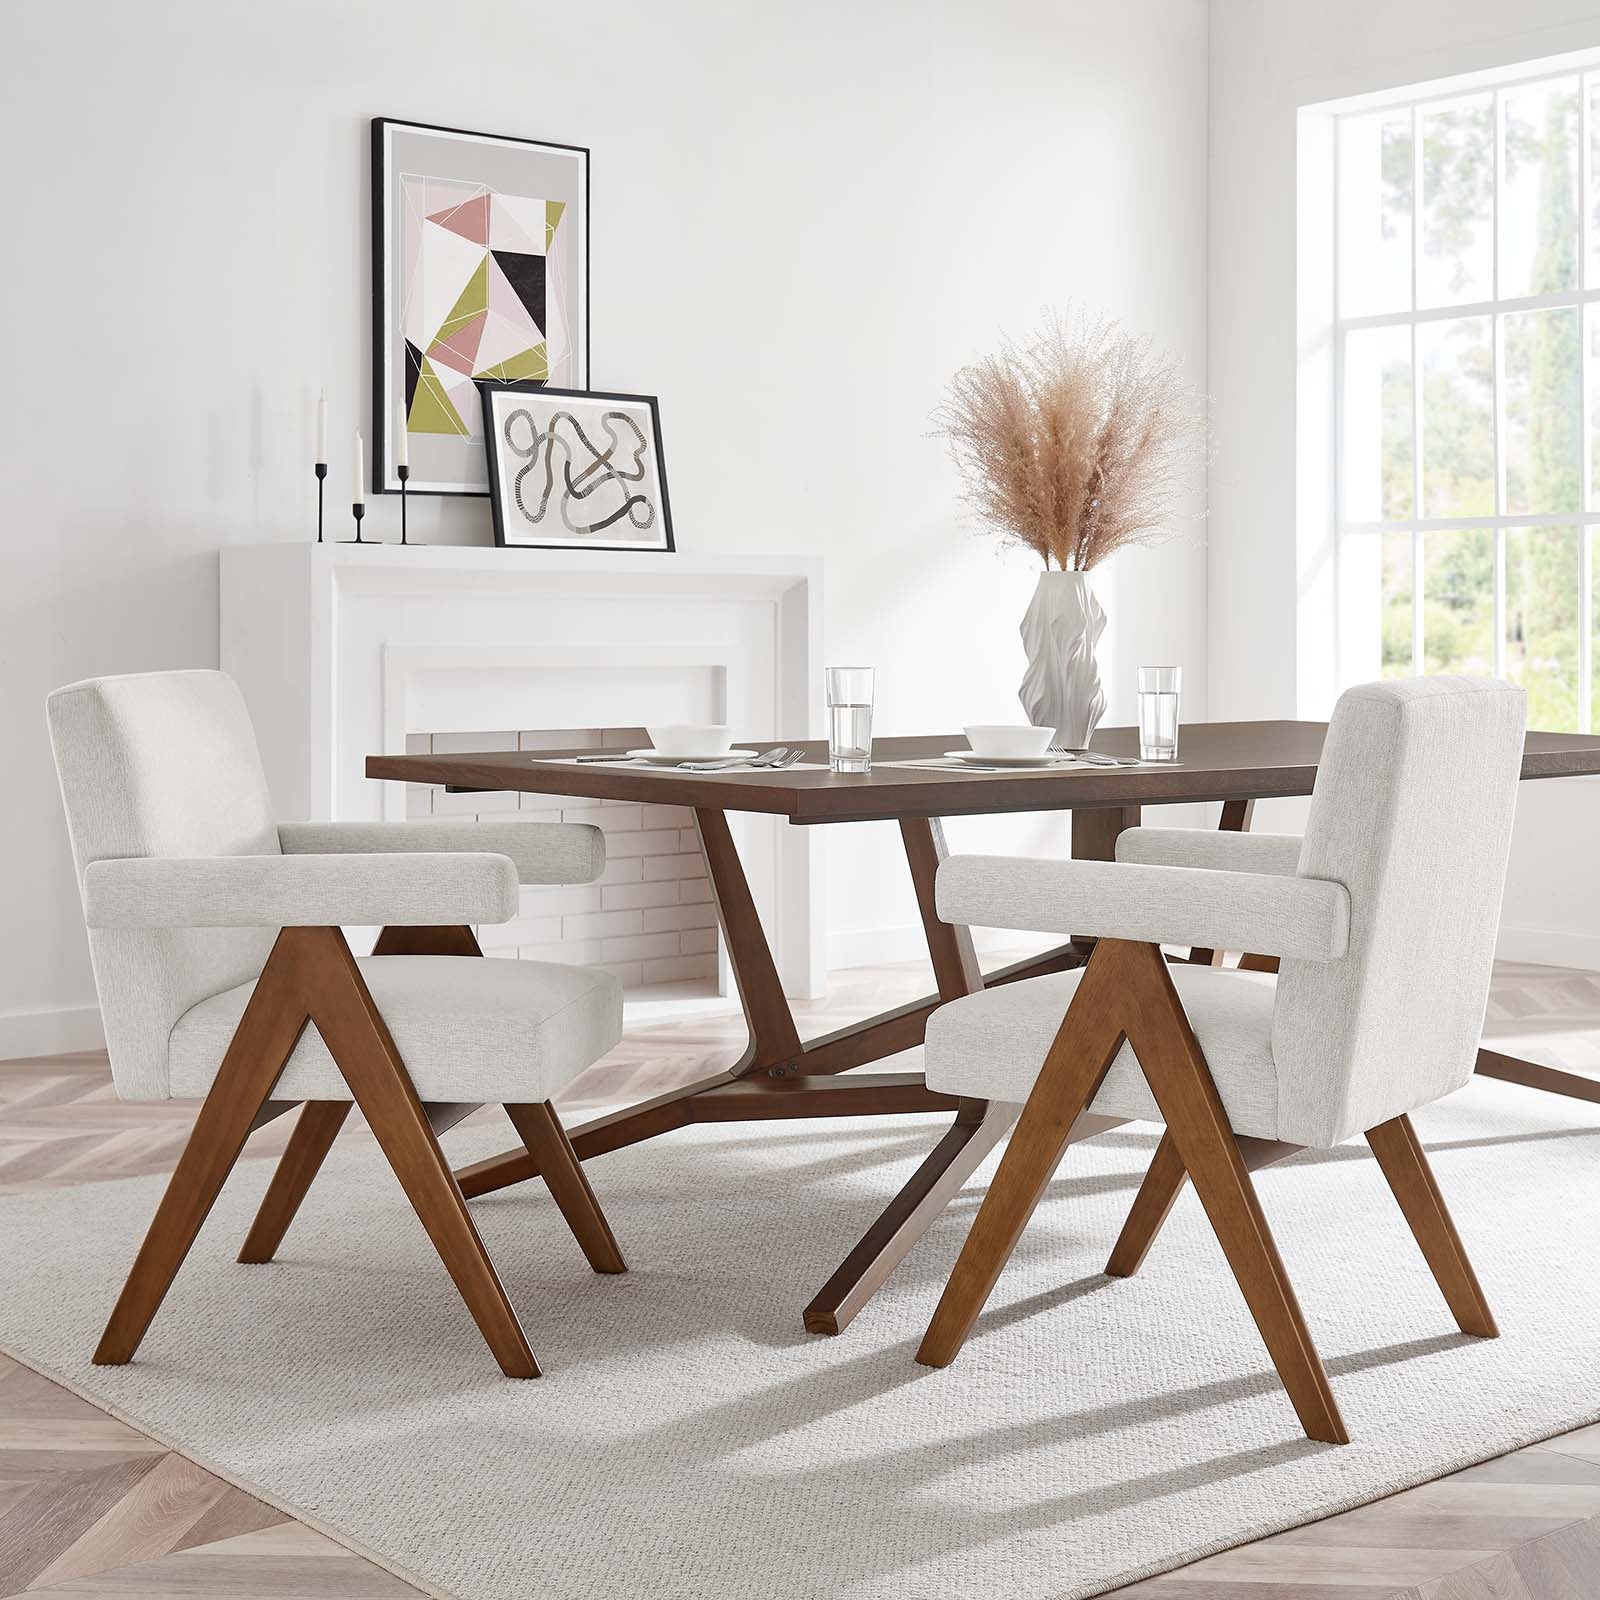 Lyra Fabric Dining Room Chair - Set of 2